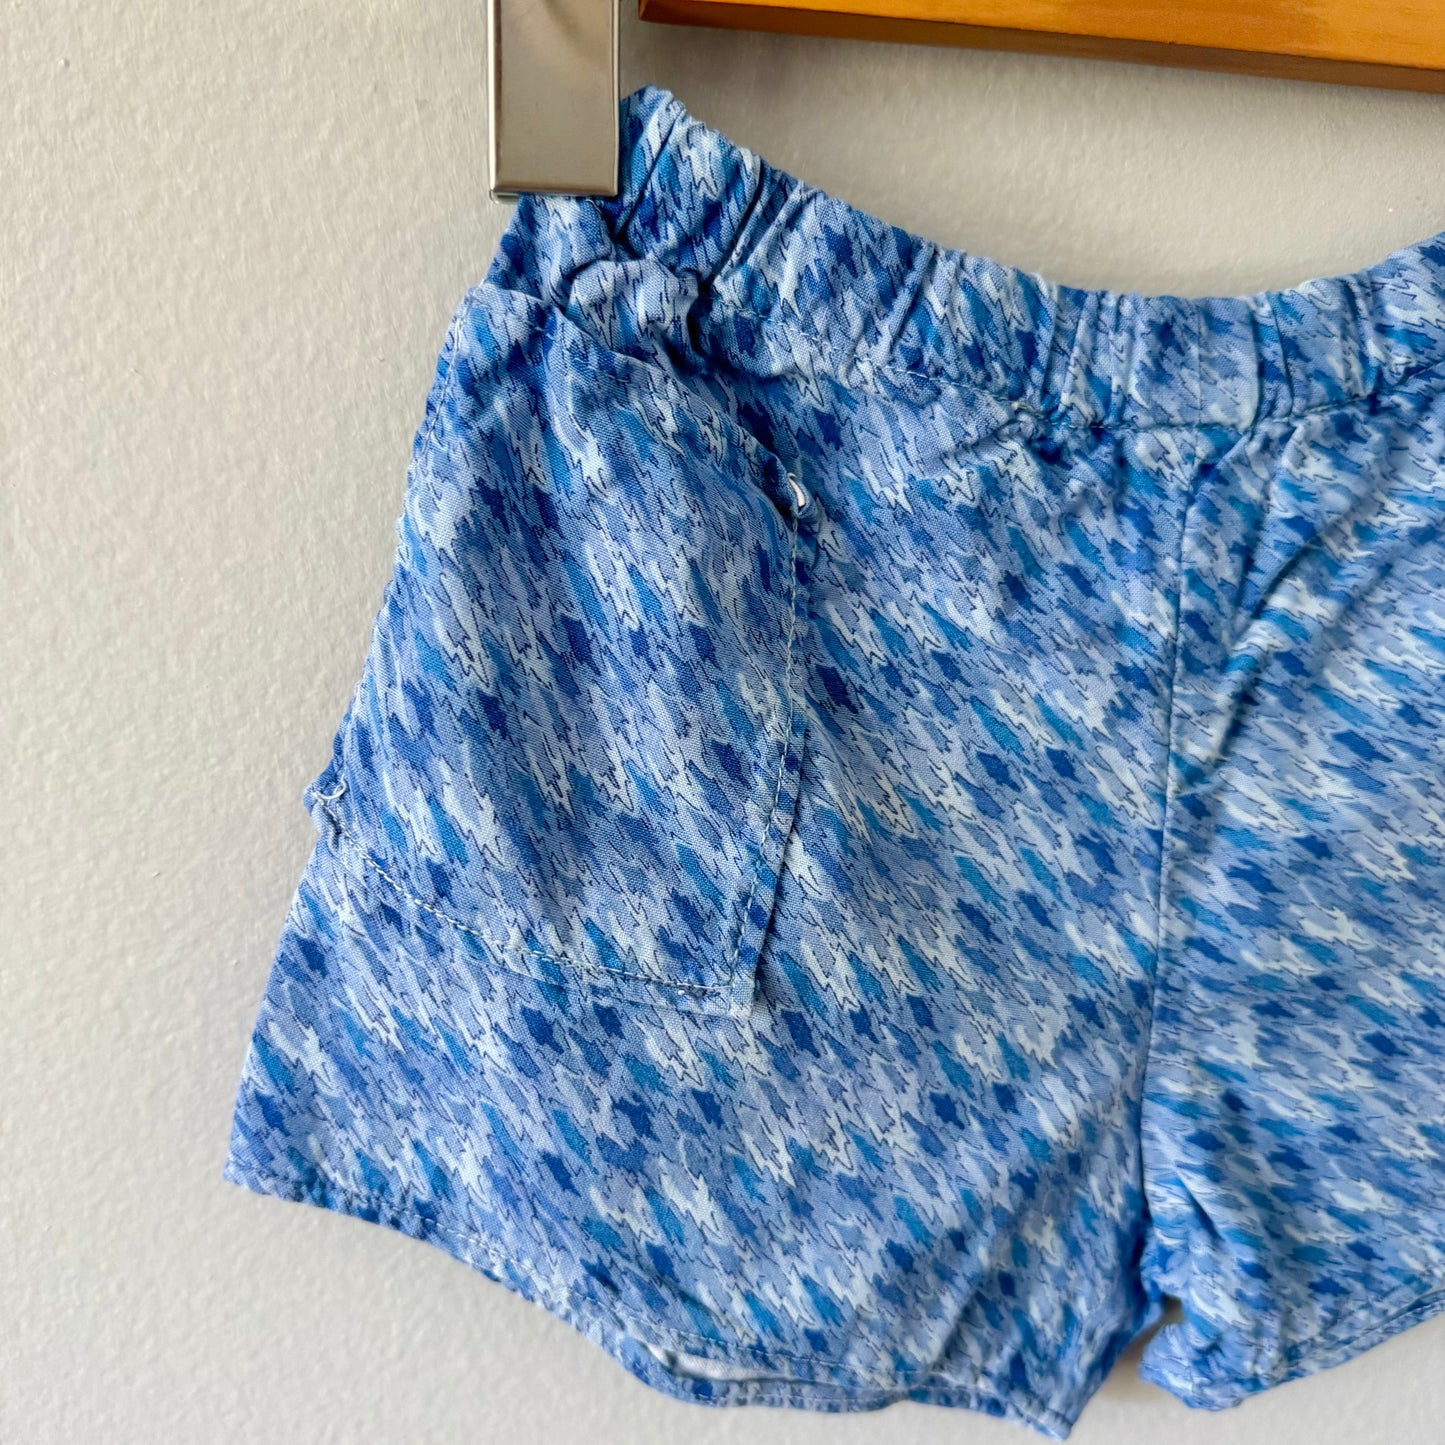 Handmade / Blue kids cotton shorts / 2Y